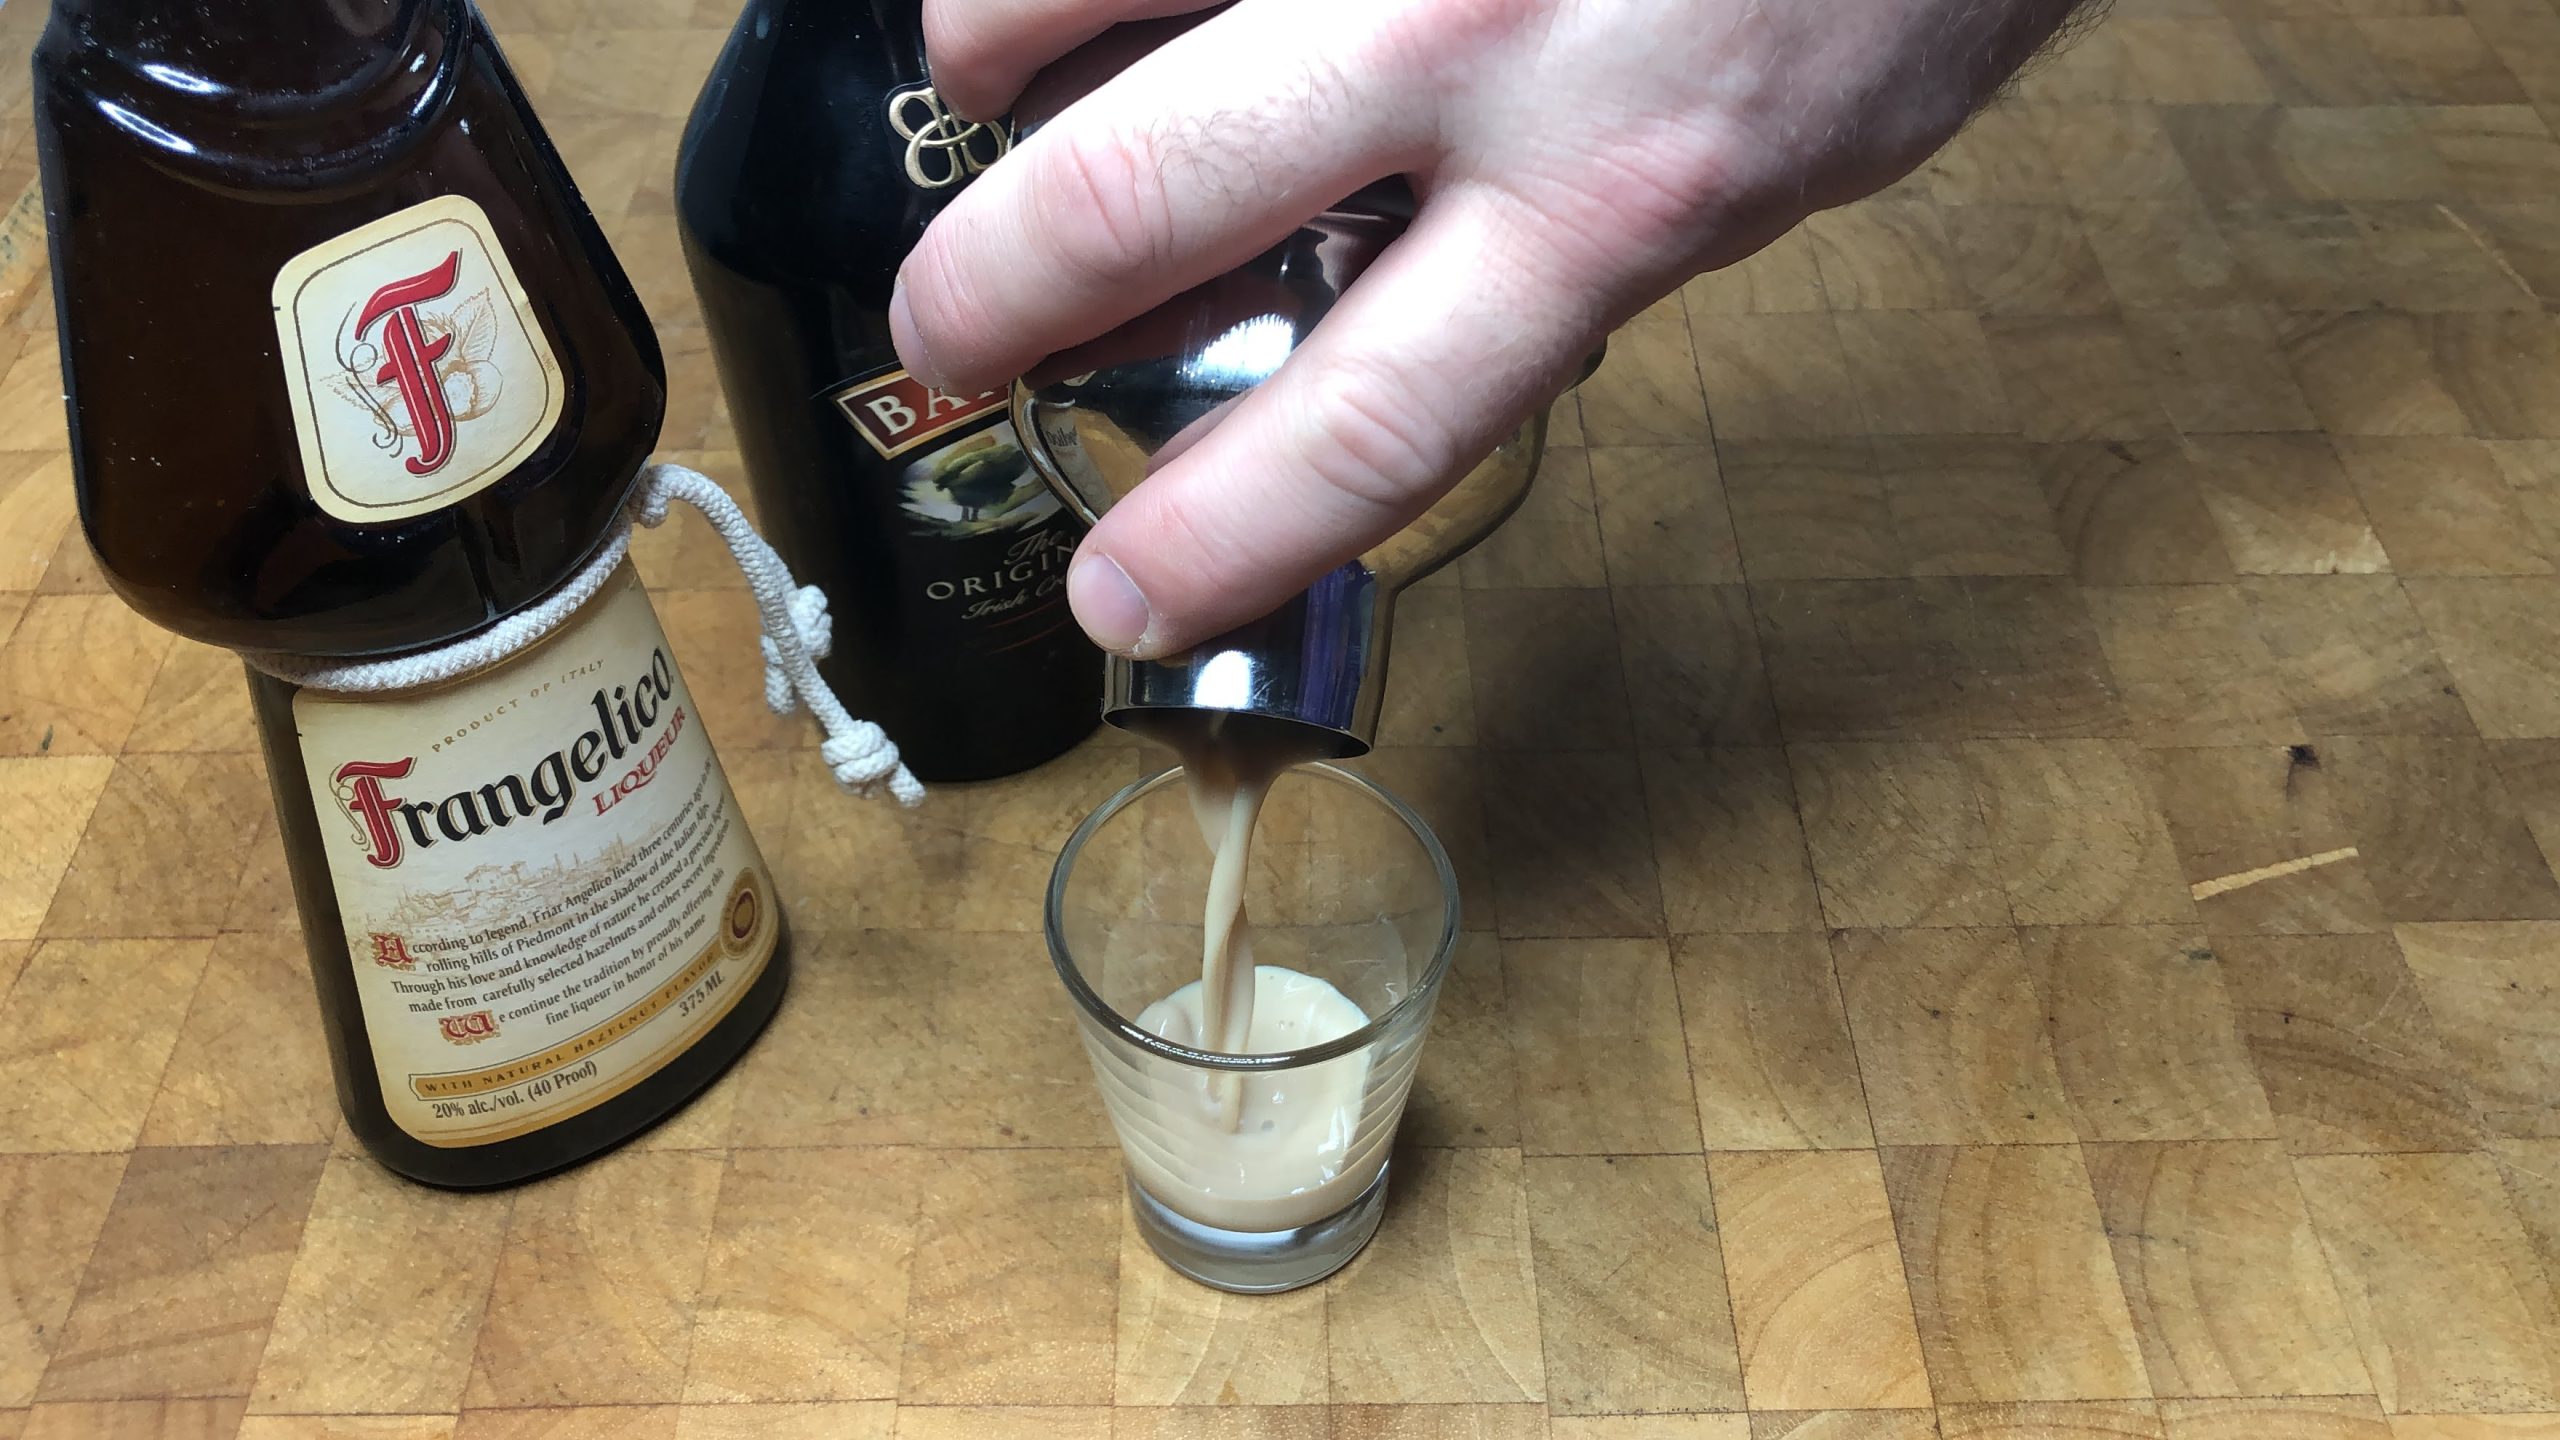 Pouring nutty irishman shot from shaker into shot glass.